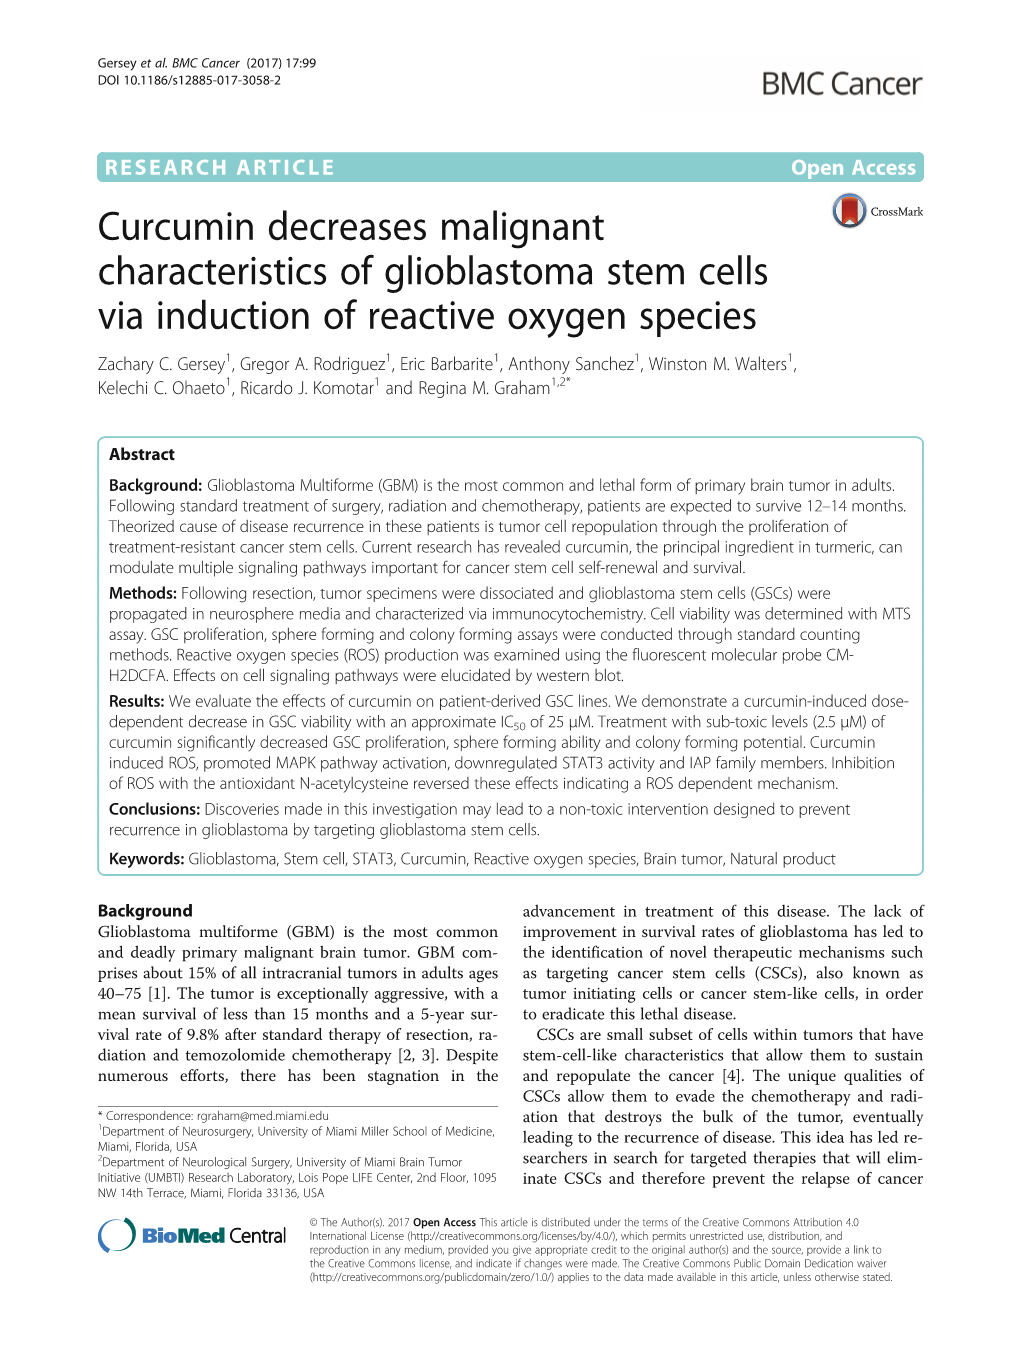 Curcumin Decreases Malignant Characteristics of Glioblastoma Stem Cells Via Induction of Reactive Oxygen Species Zachary C